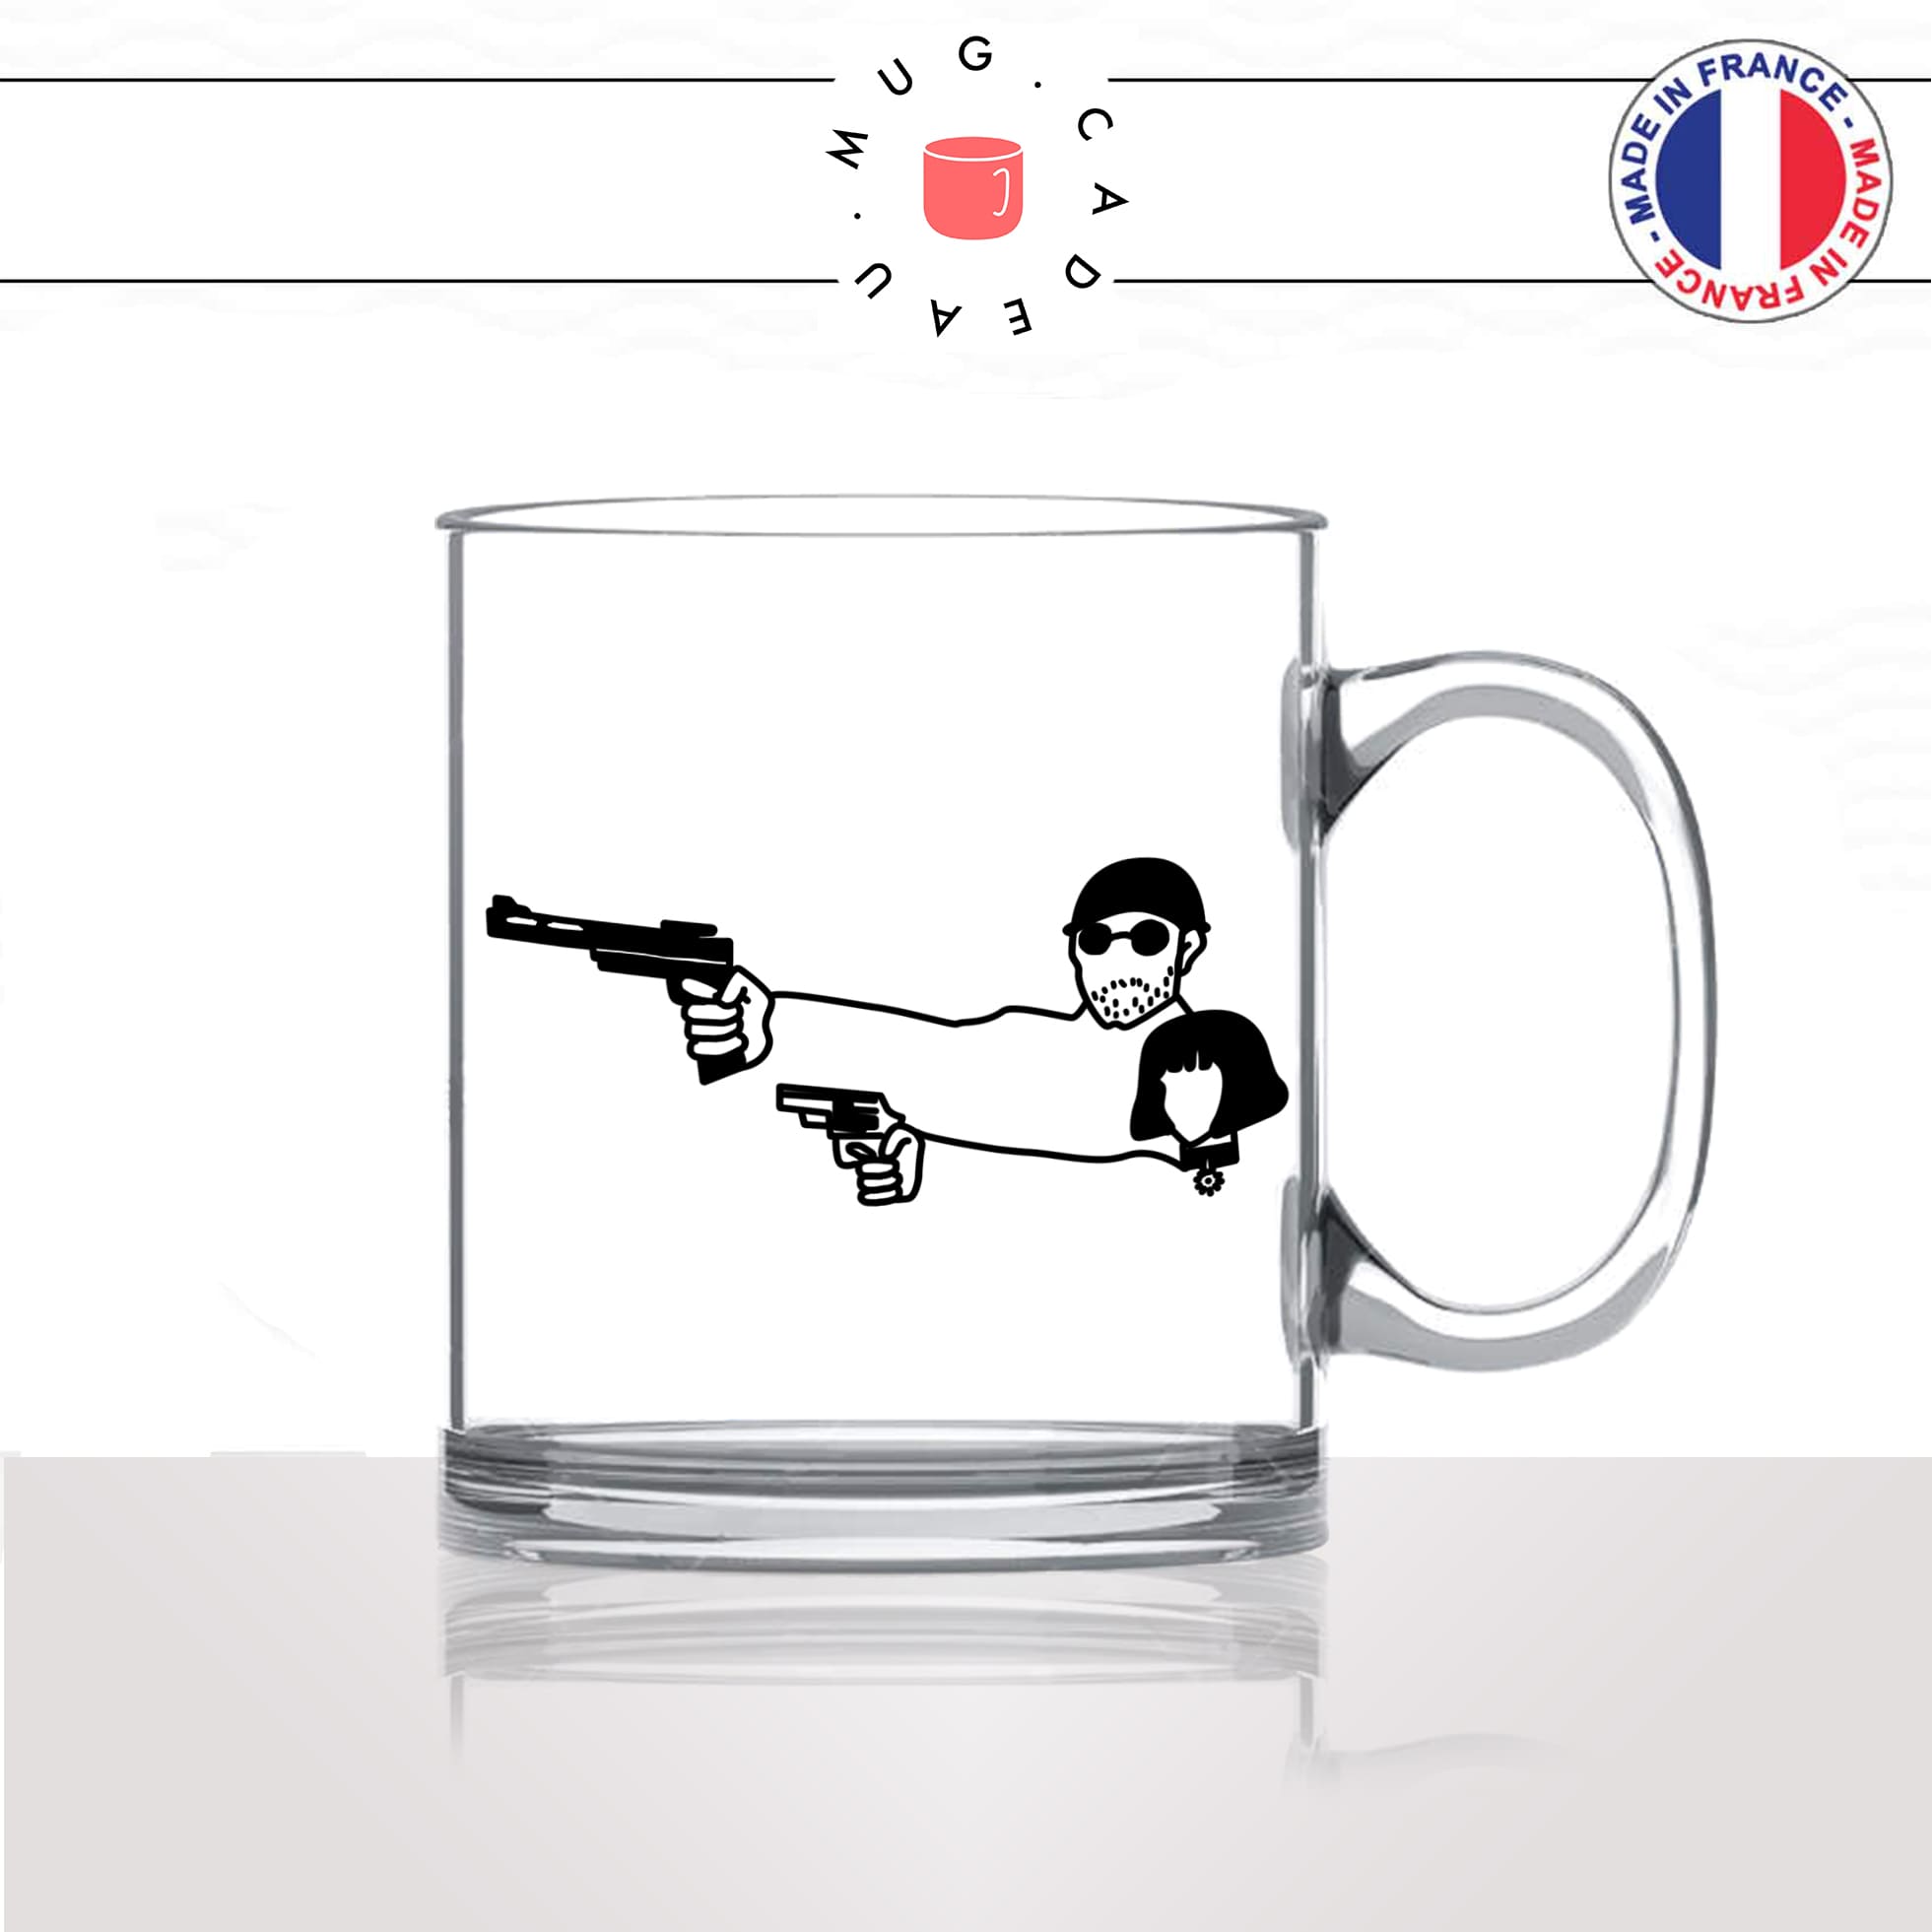 mug-tasse-en-verre-transparent-glass-film-francais-leon-jean-renaud-culte-france-dessin-fan-cinema-guns-arme-idée-cadeau-fun-cool-café-thé2